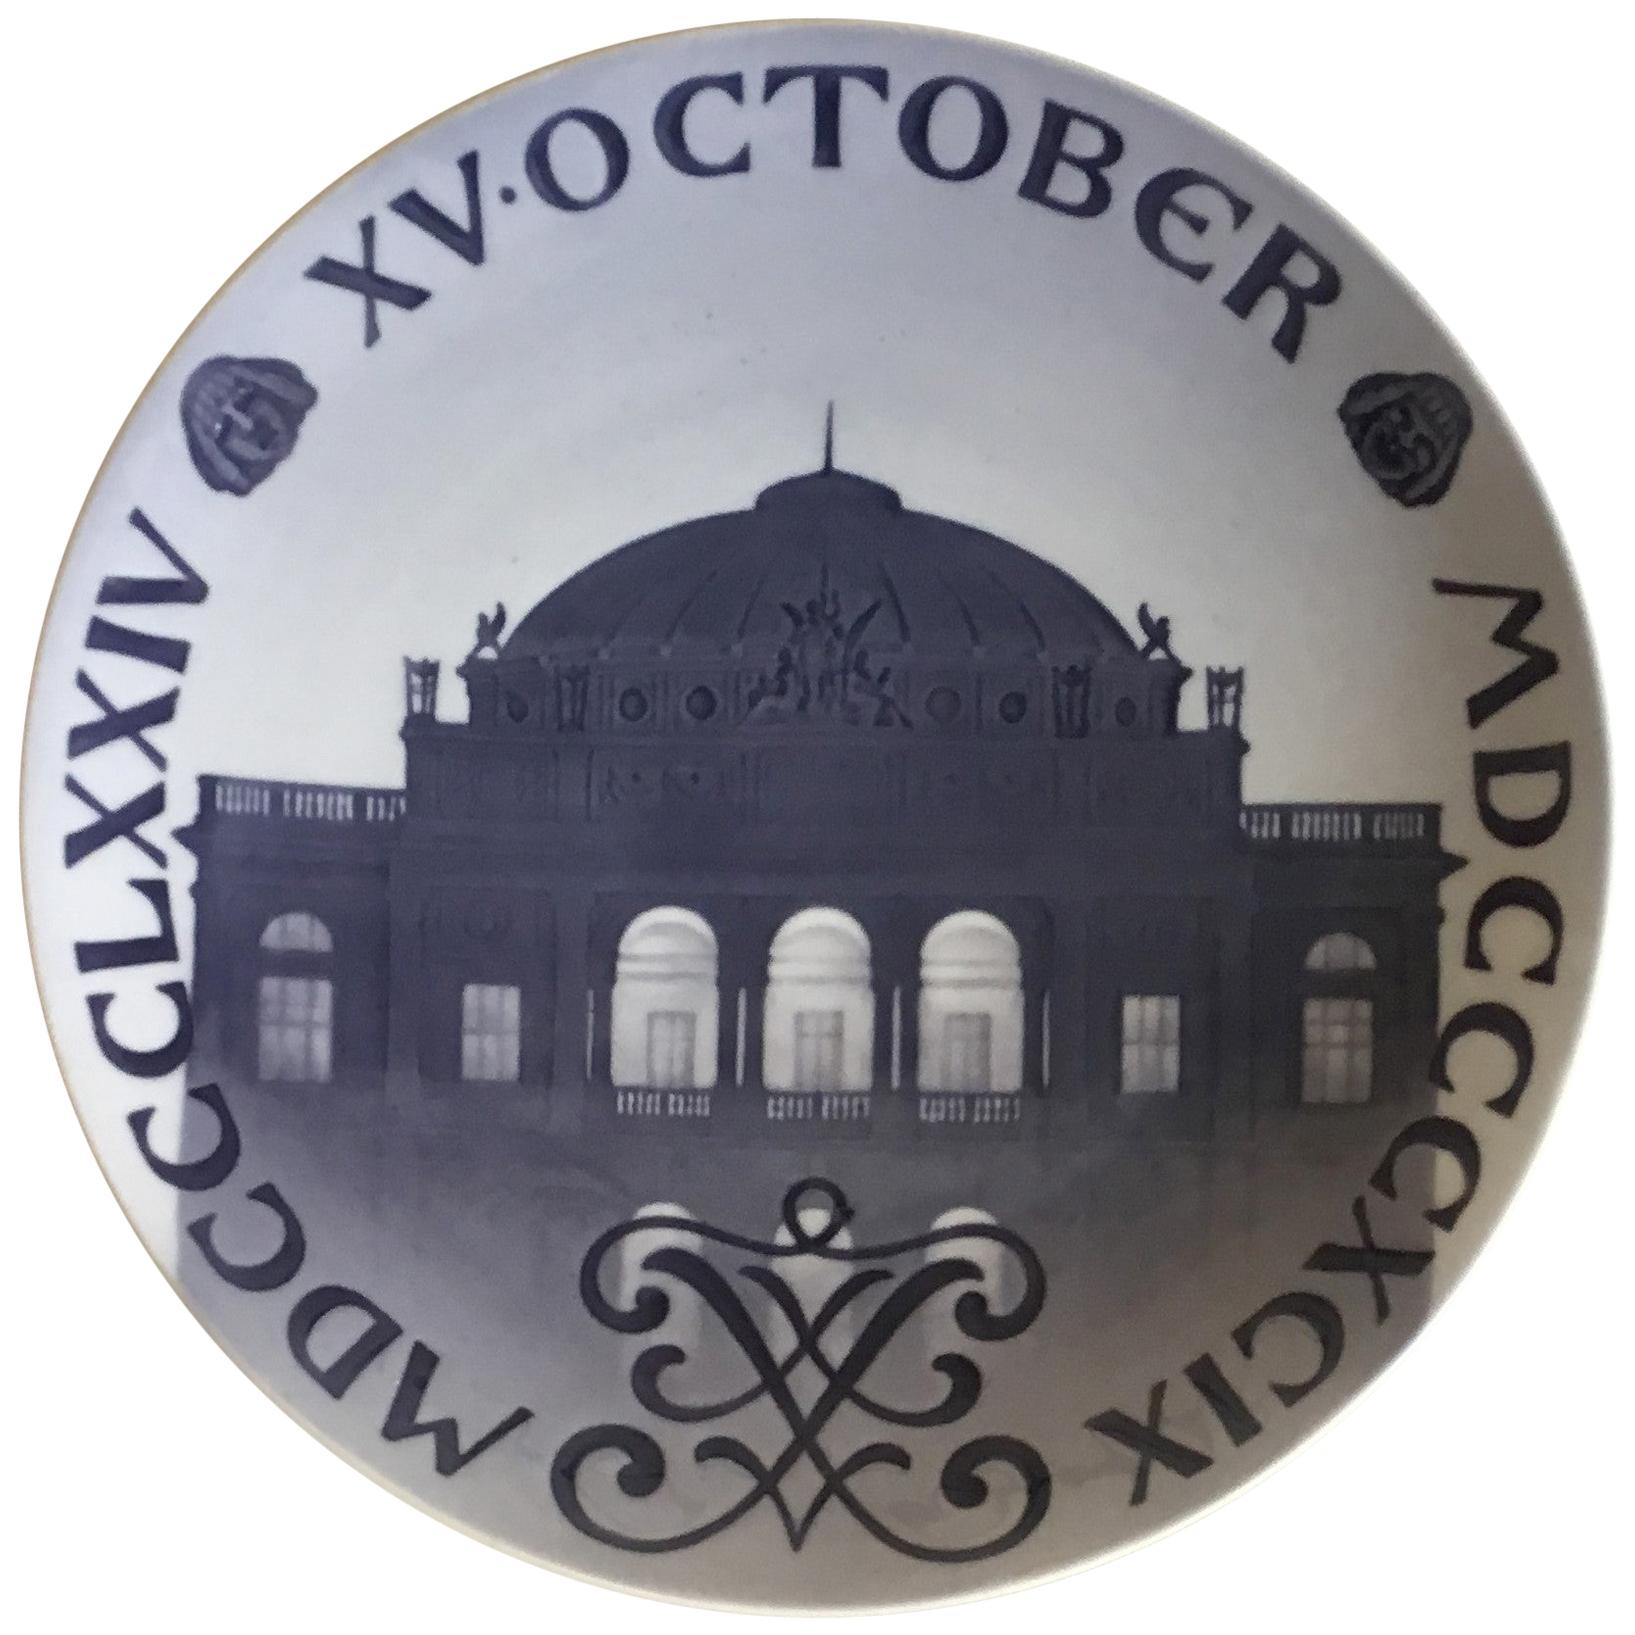 Royal Copenhagen Commemorative Plate from 1899 RC-CM36